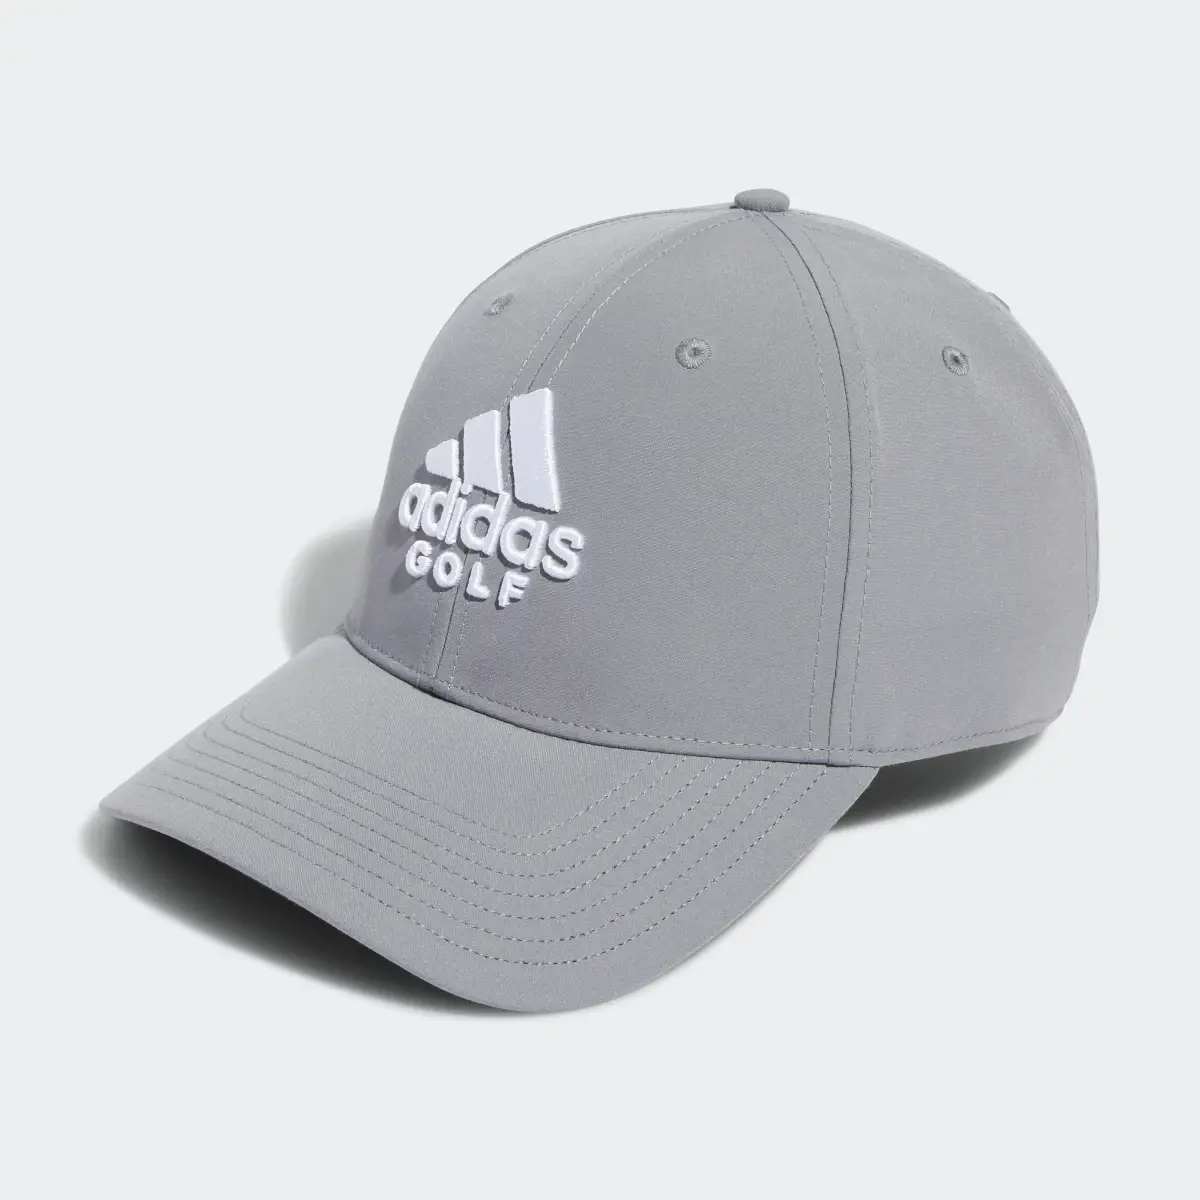 Adidas Golf Performance Cap. 2